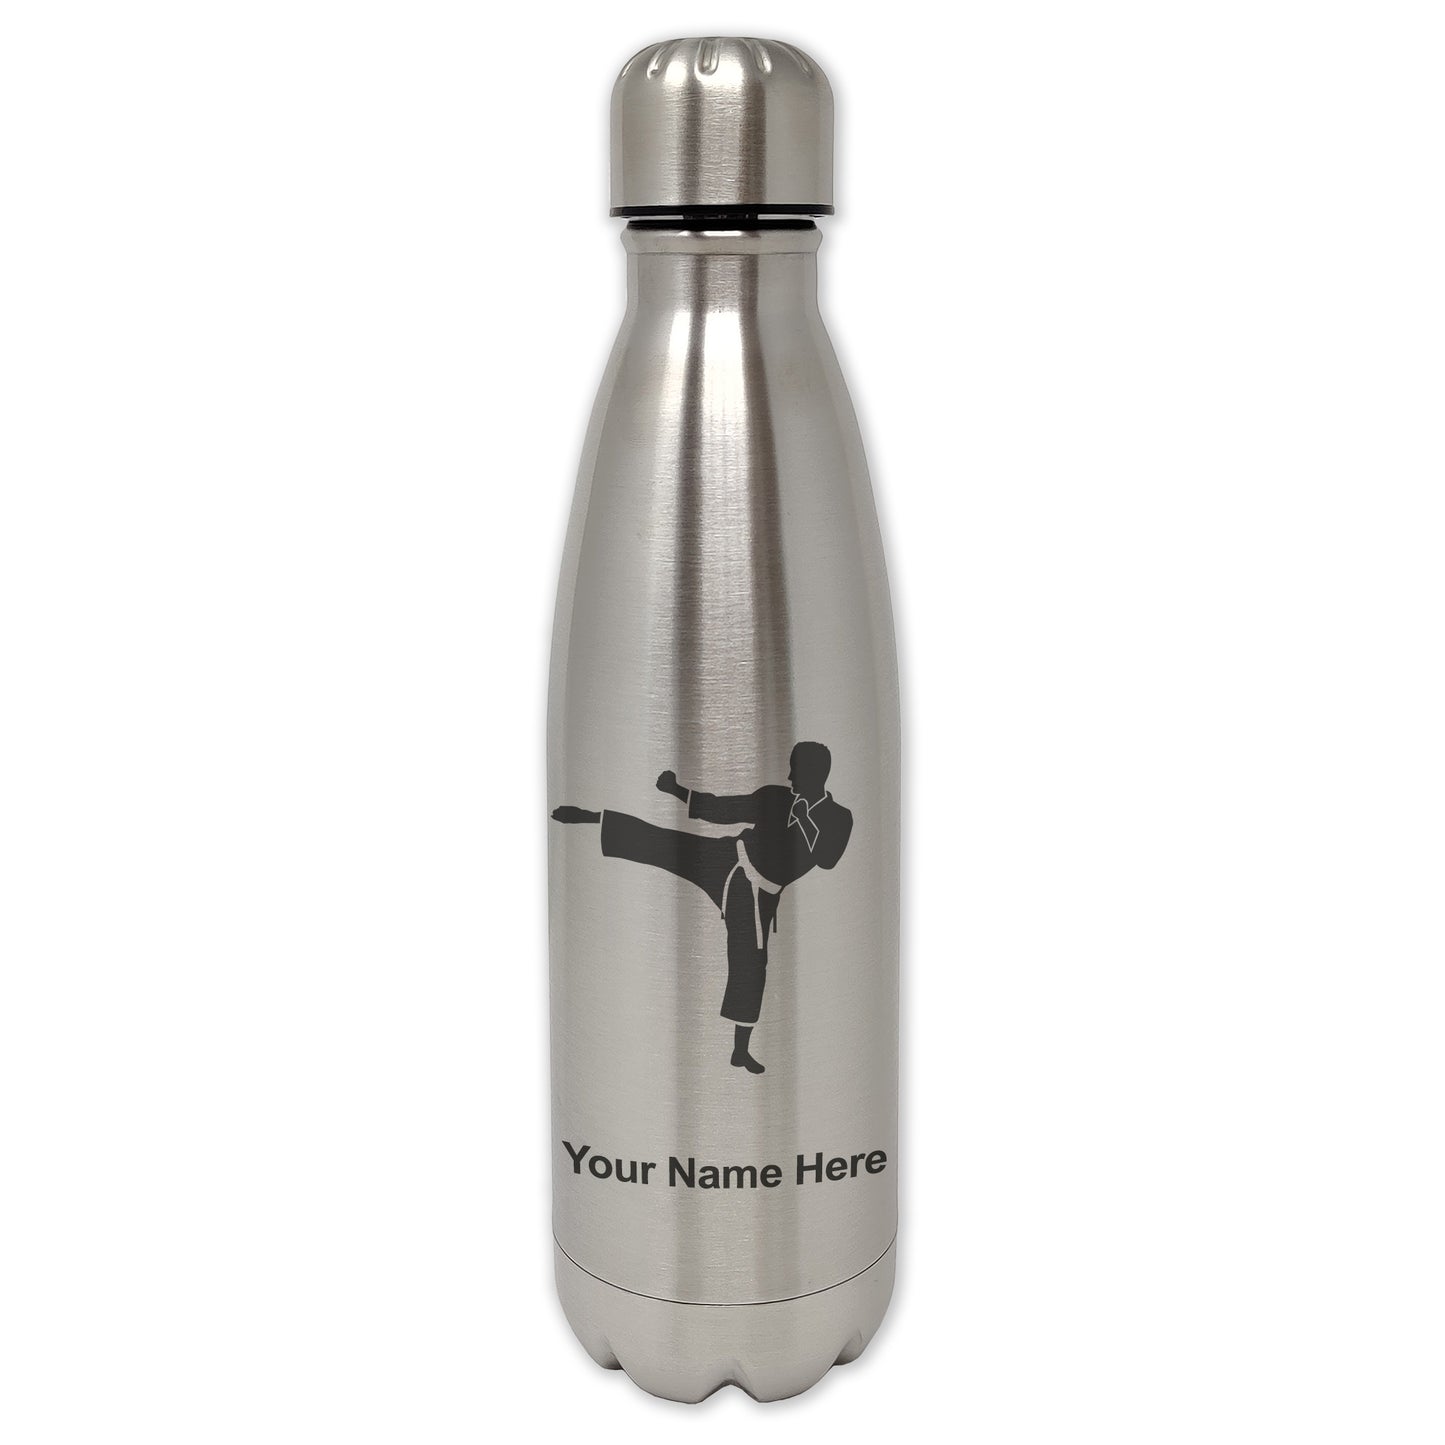 LaserGram Single Wall Water Bottle, Karate Man, Personalized Engraving Included